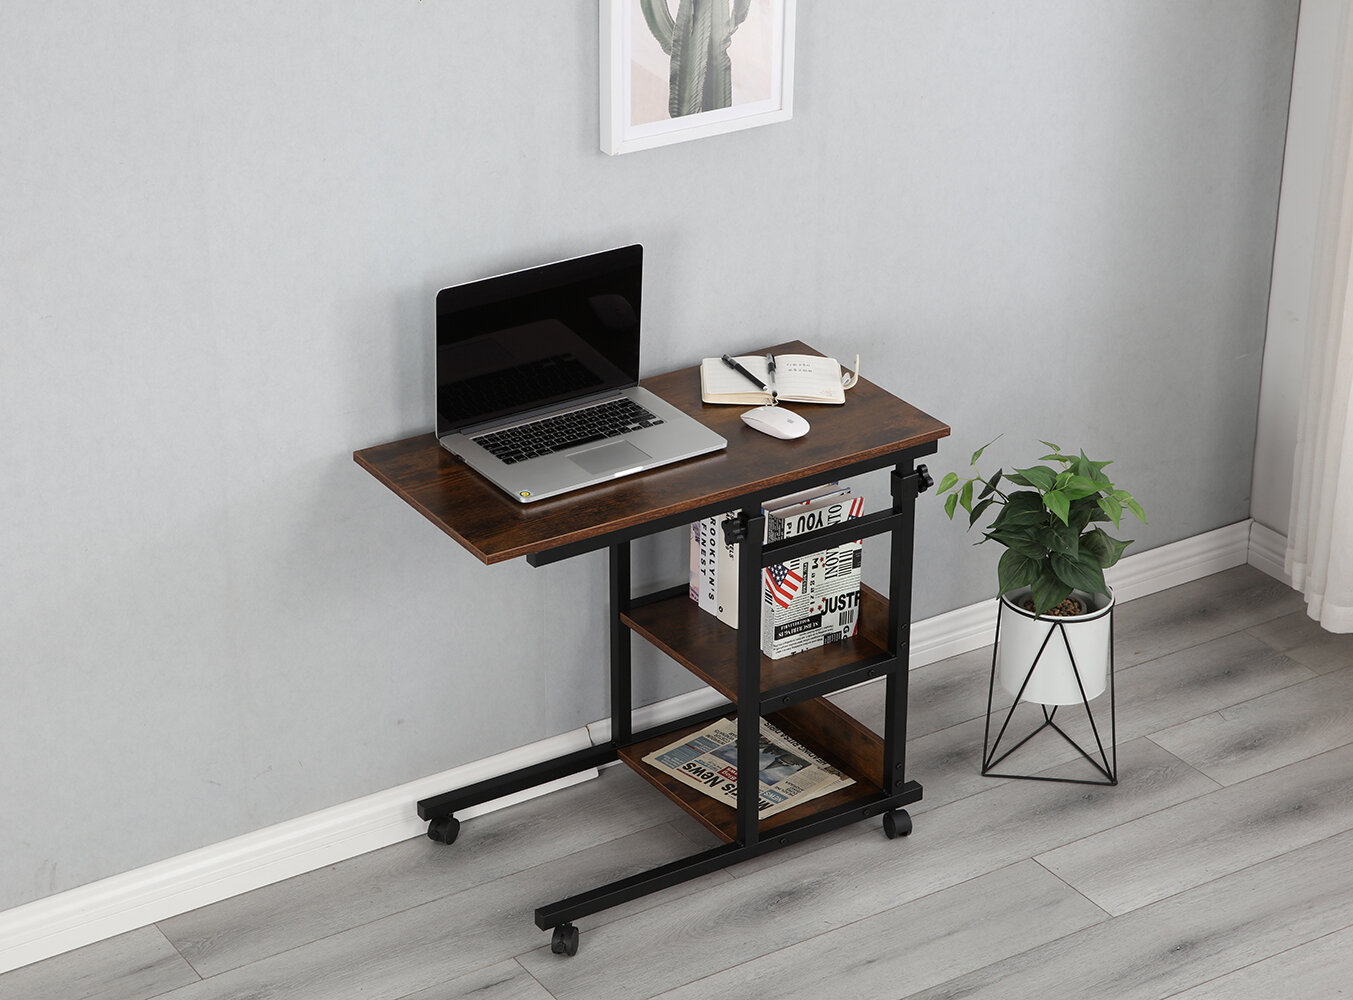 Details about   Adjustable Computer Desk Laptop Rolling Shelf Stand Up Lift Table Home Furniture 